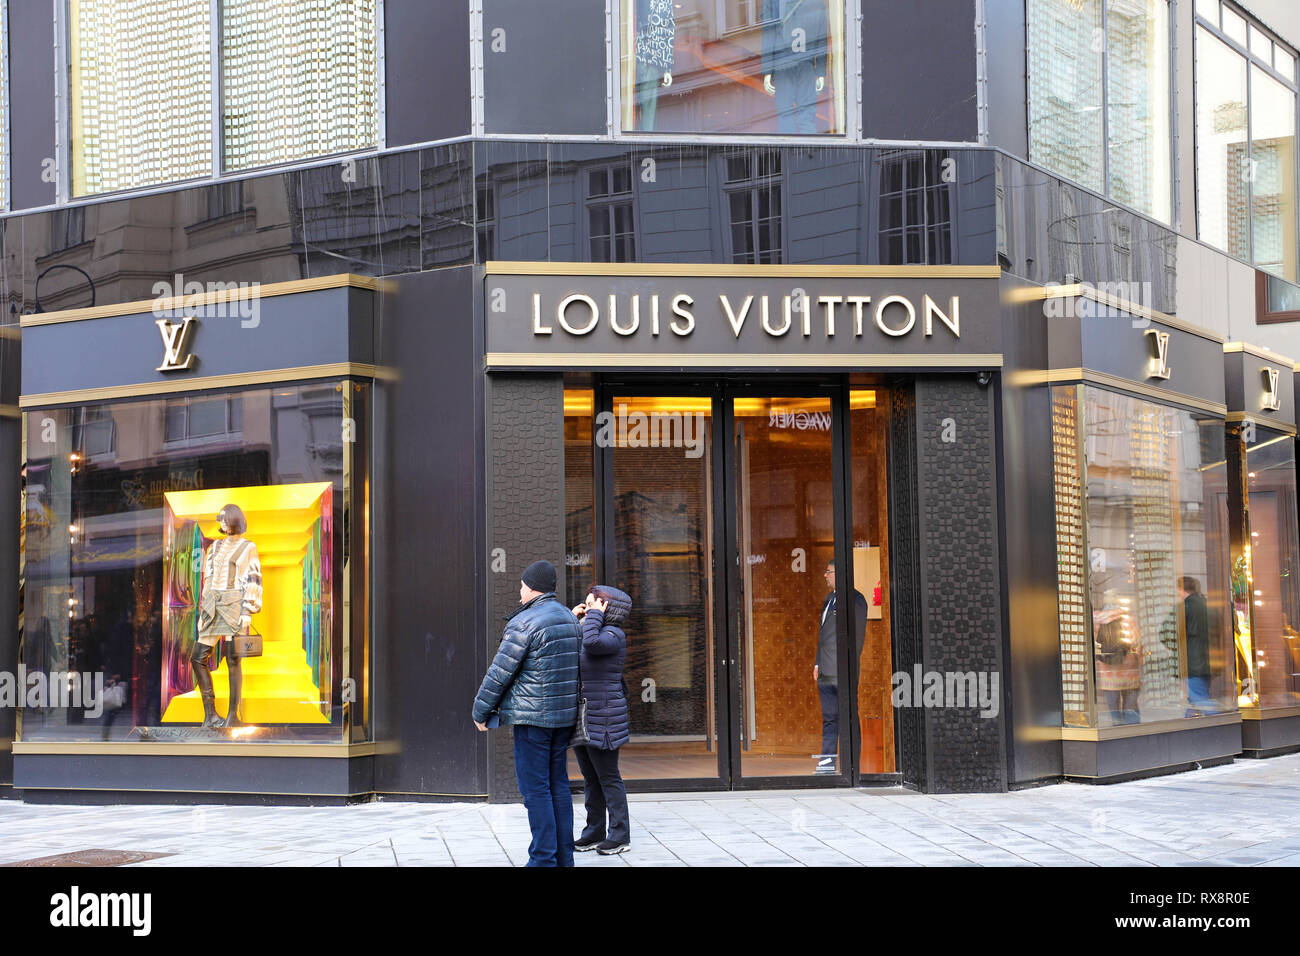 VIENNA, AUSTRIA - JANUARY 8, 2019:  A front exterior view of the Louis Vuitton store in Vienna main street, Austria Stock Photo